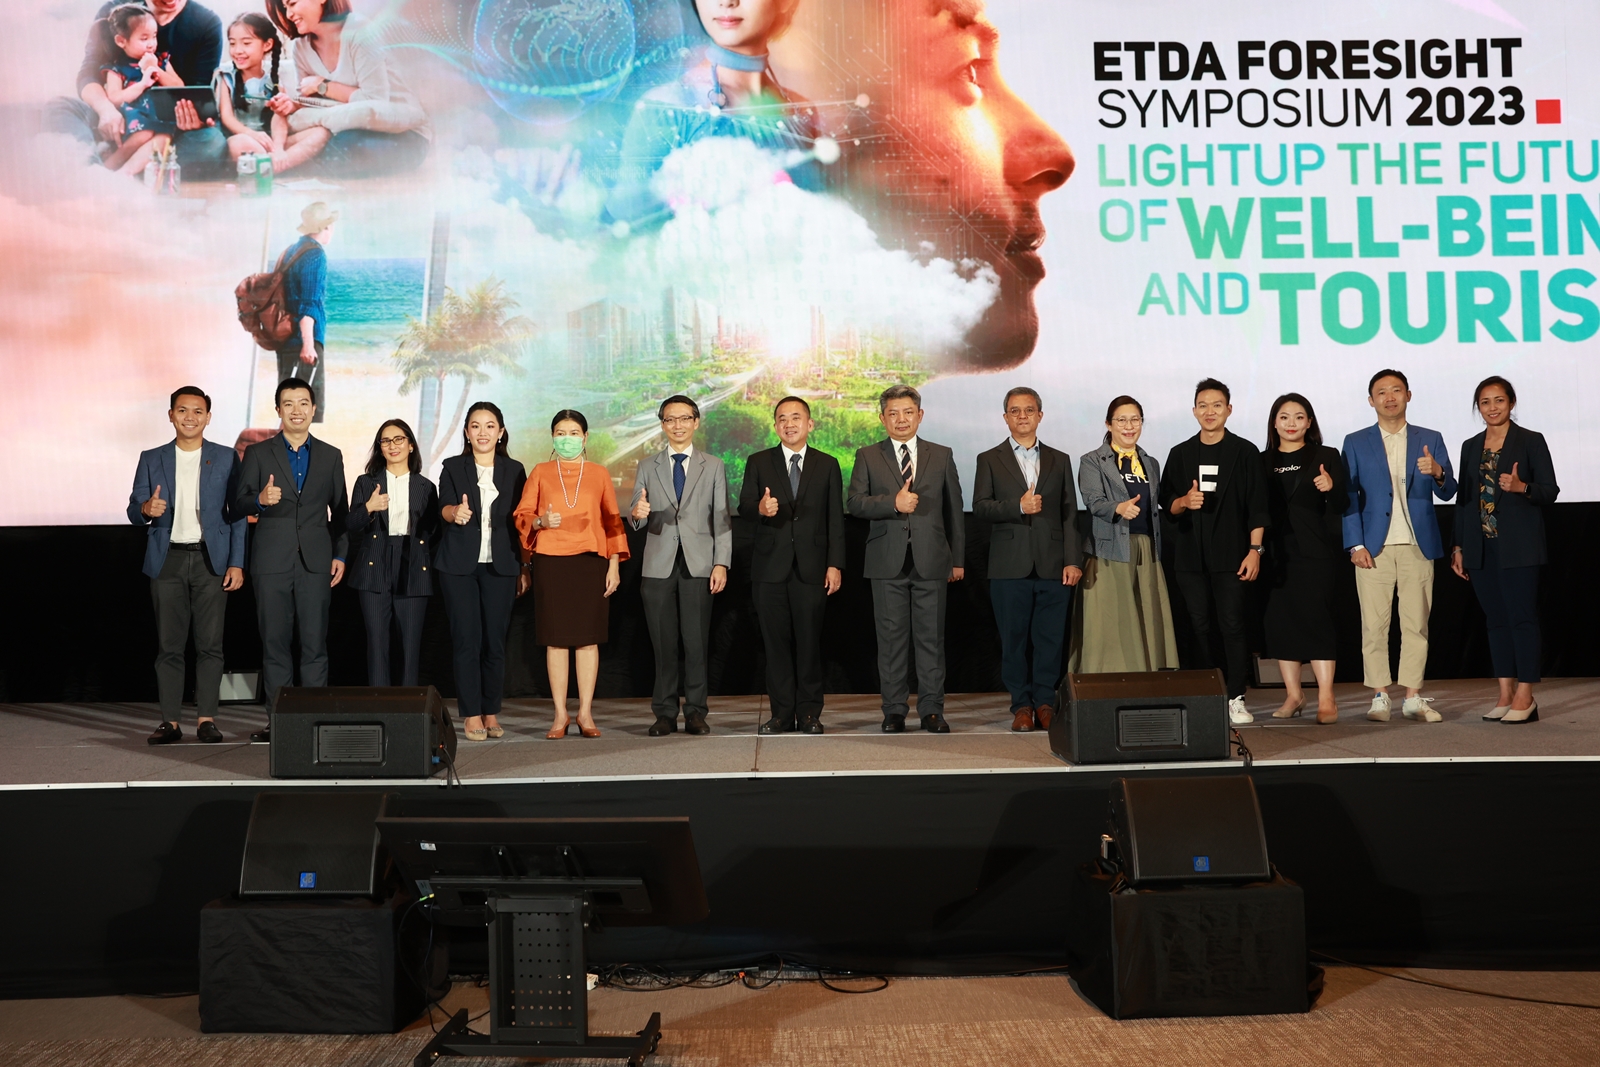 ETDA จัดใหญ่ ETDA Foresight Symposium 2023 เปิดภาพอนาคตดิจิทัล สุขภาวะและท่องเที่ยวไทย 10 ปีข้างหน้า